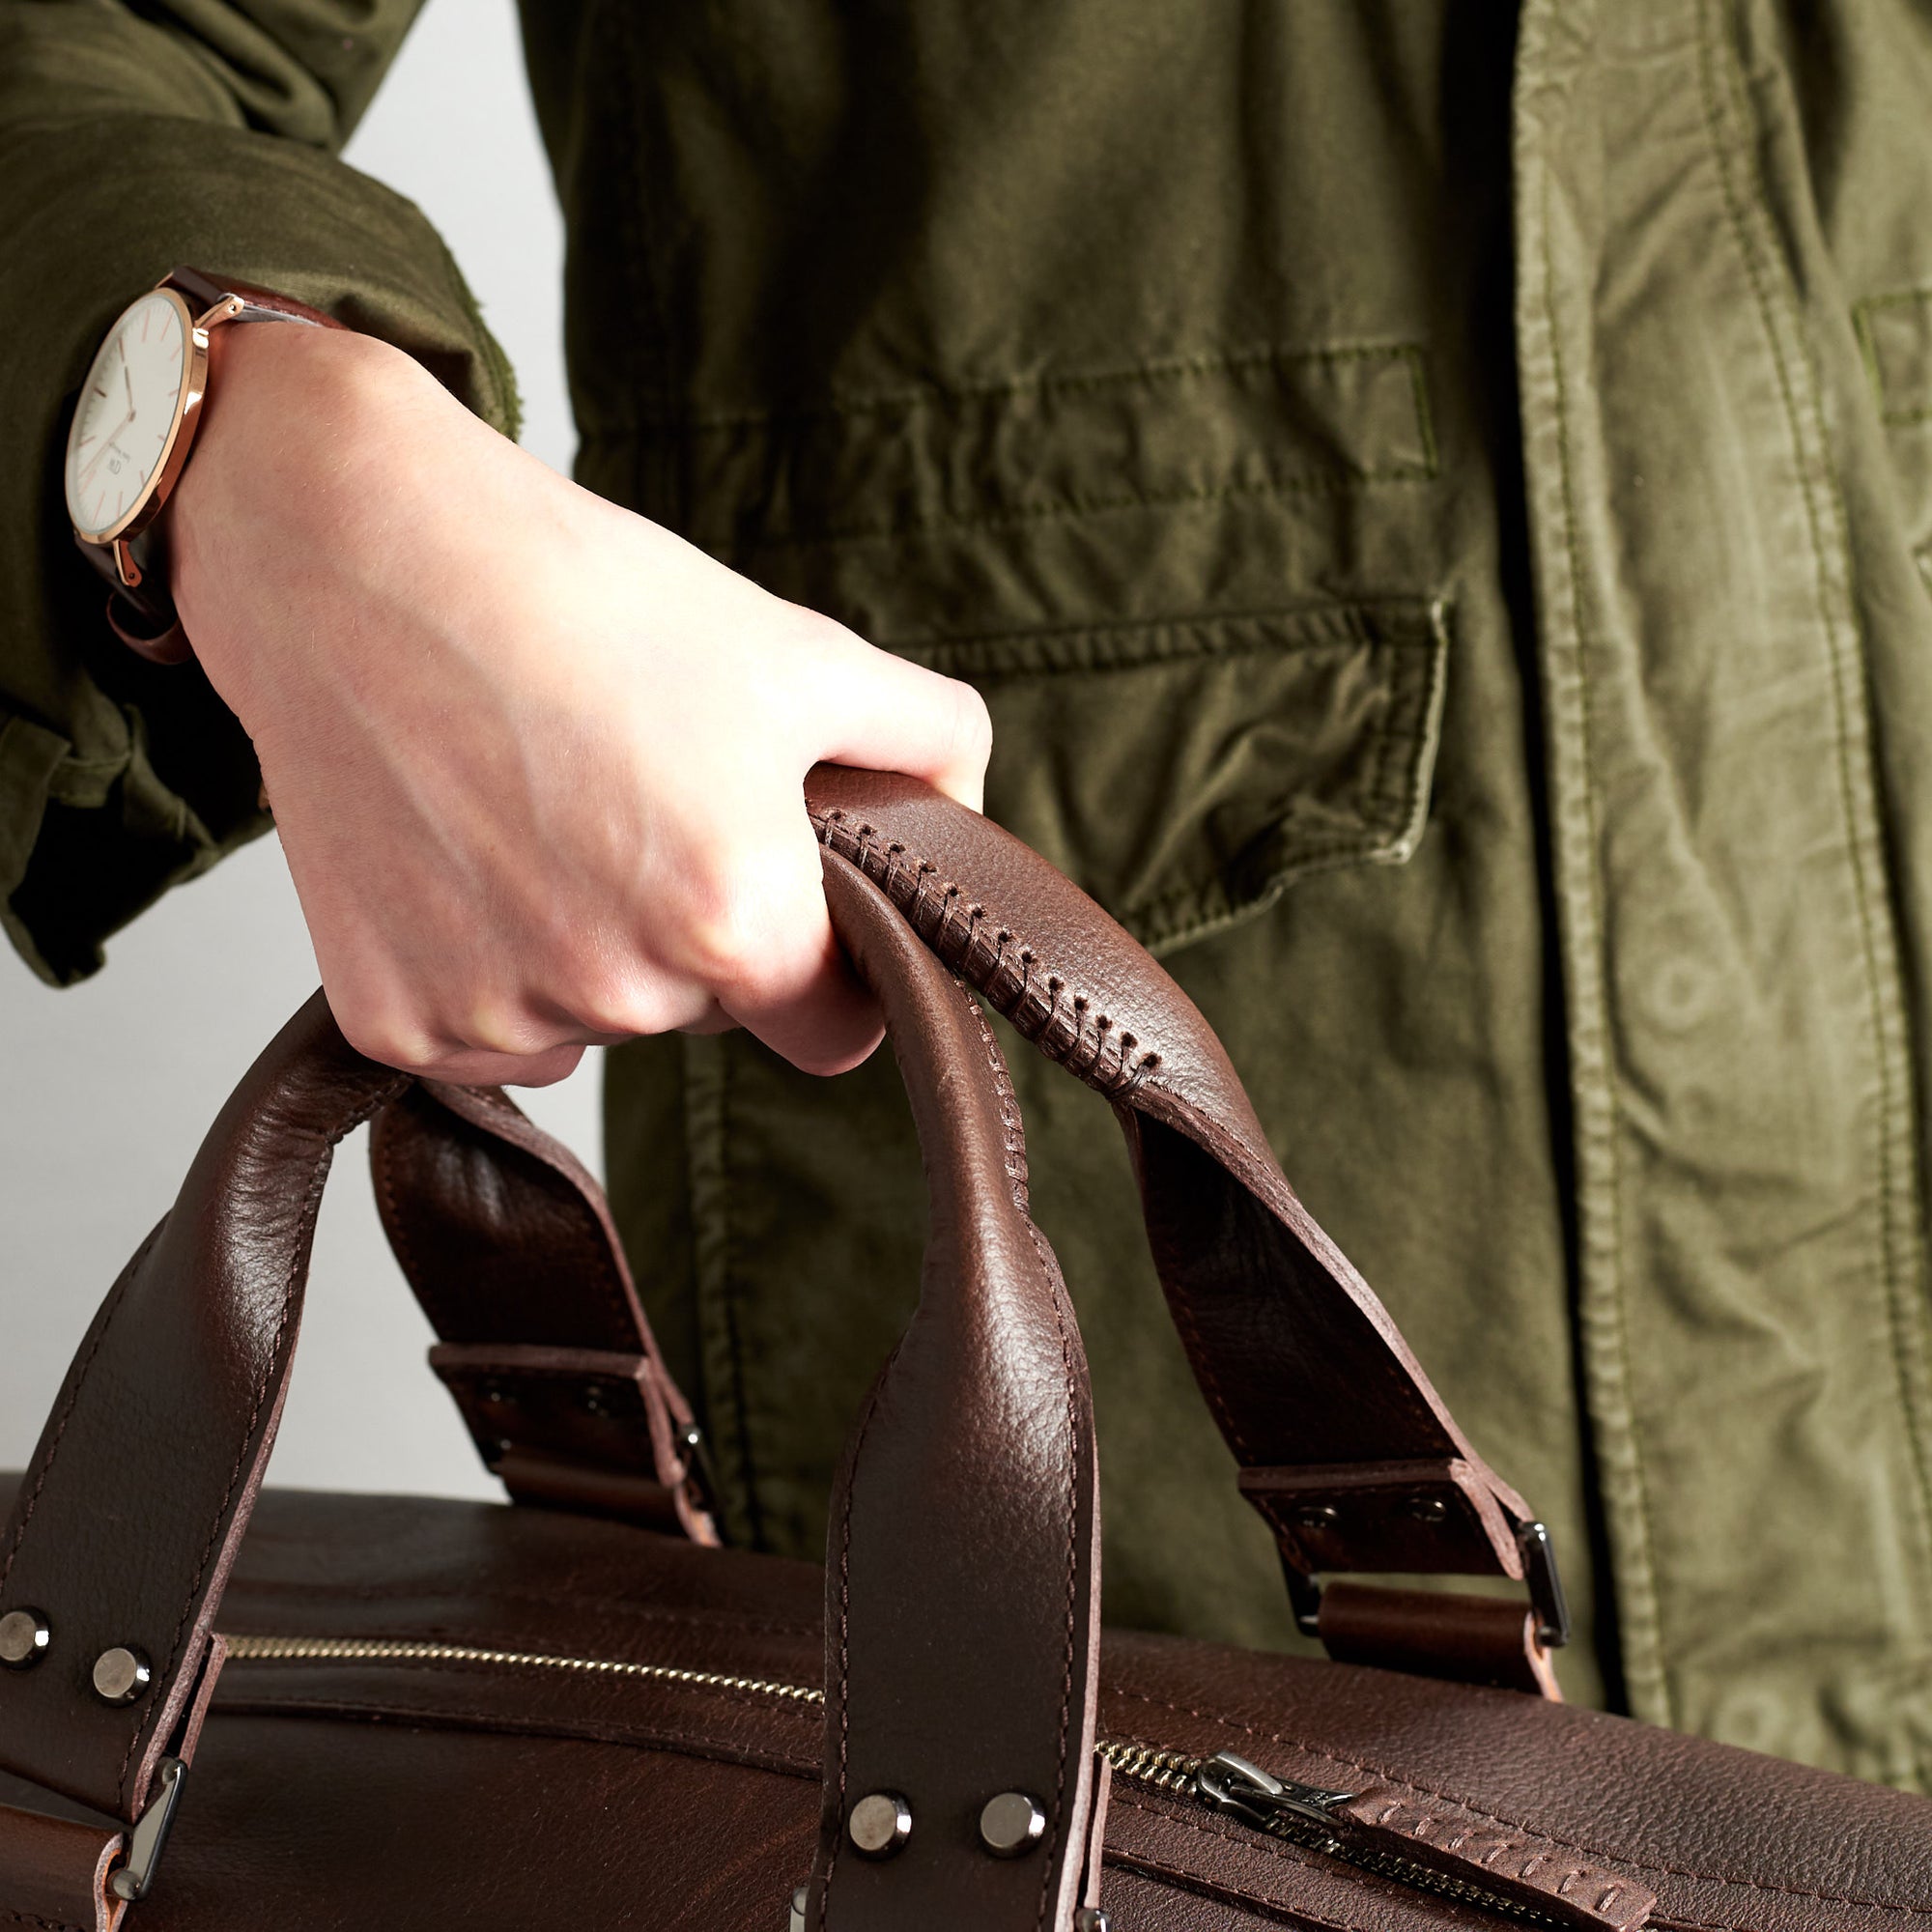 Style handles detail. Substantial dark brown duffle bag by Capra Leather.